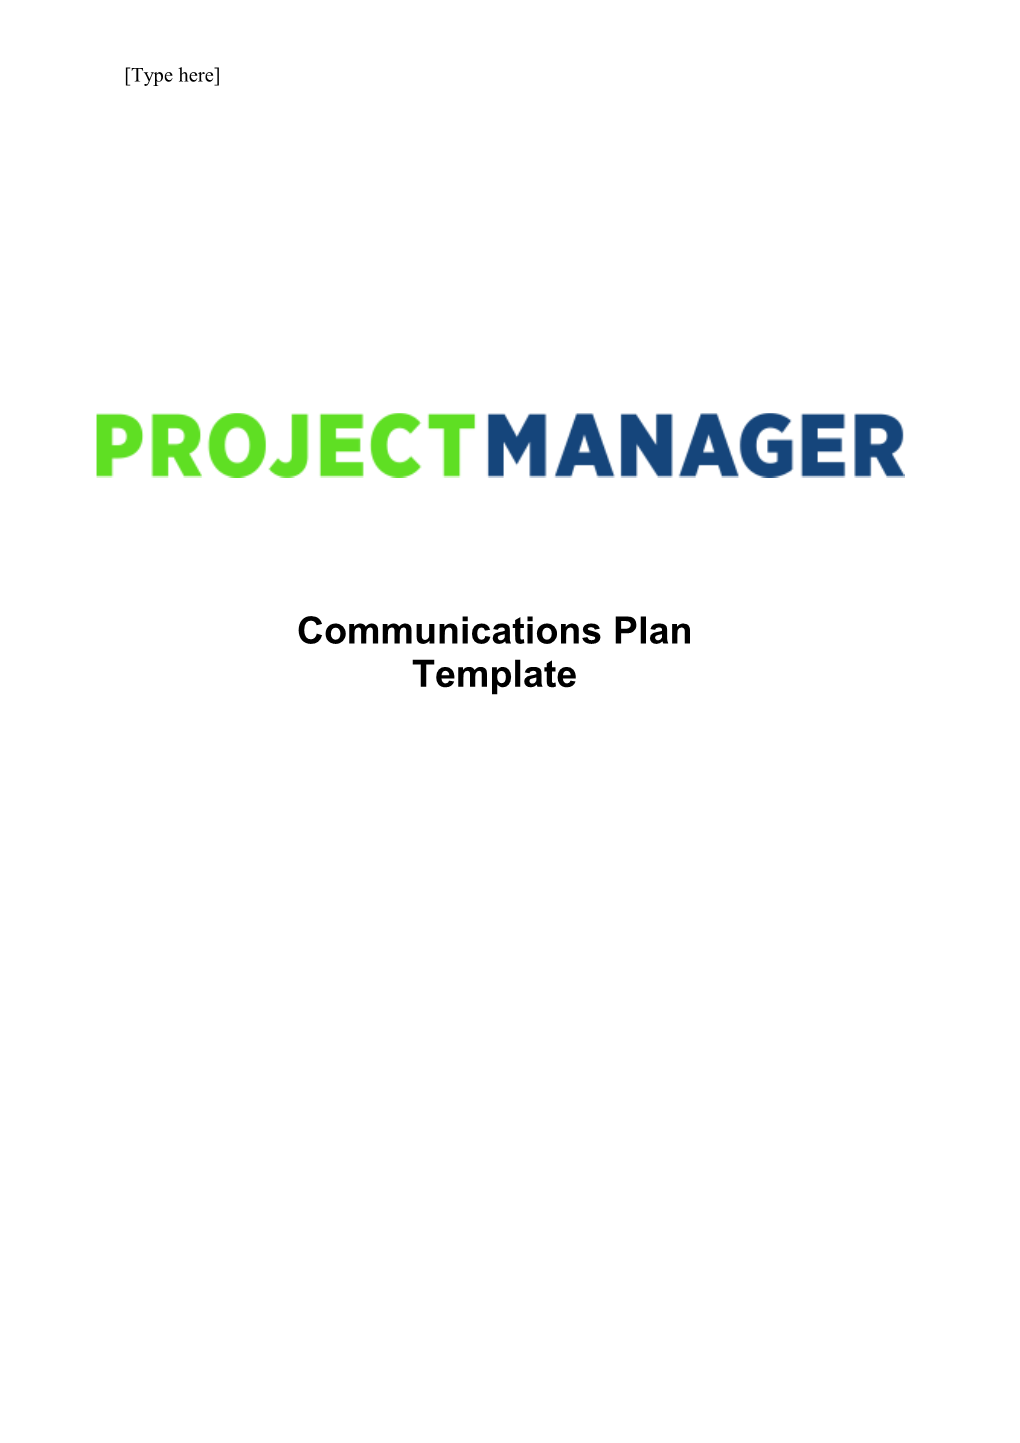 Communications Plan Template